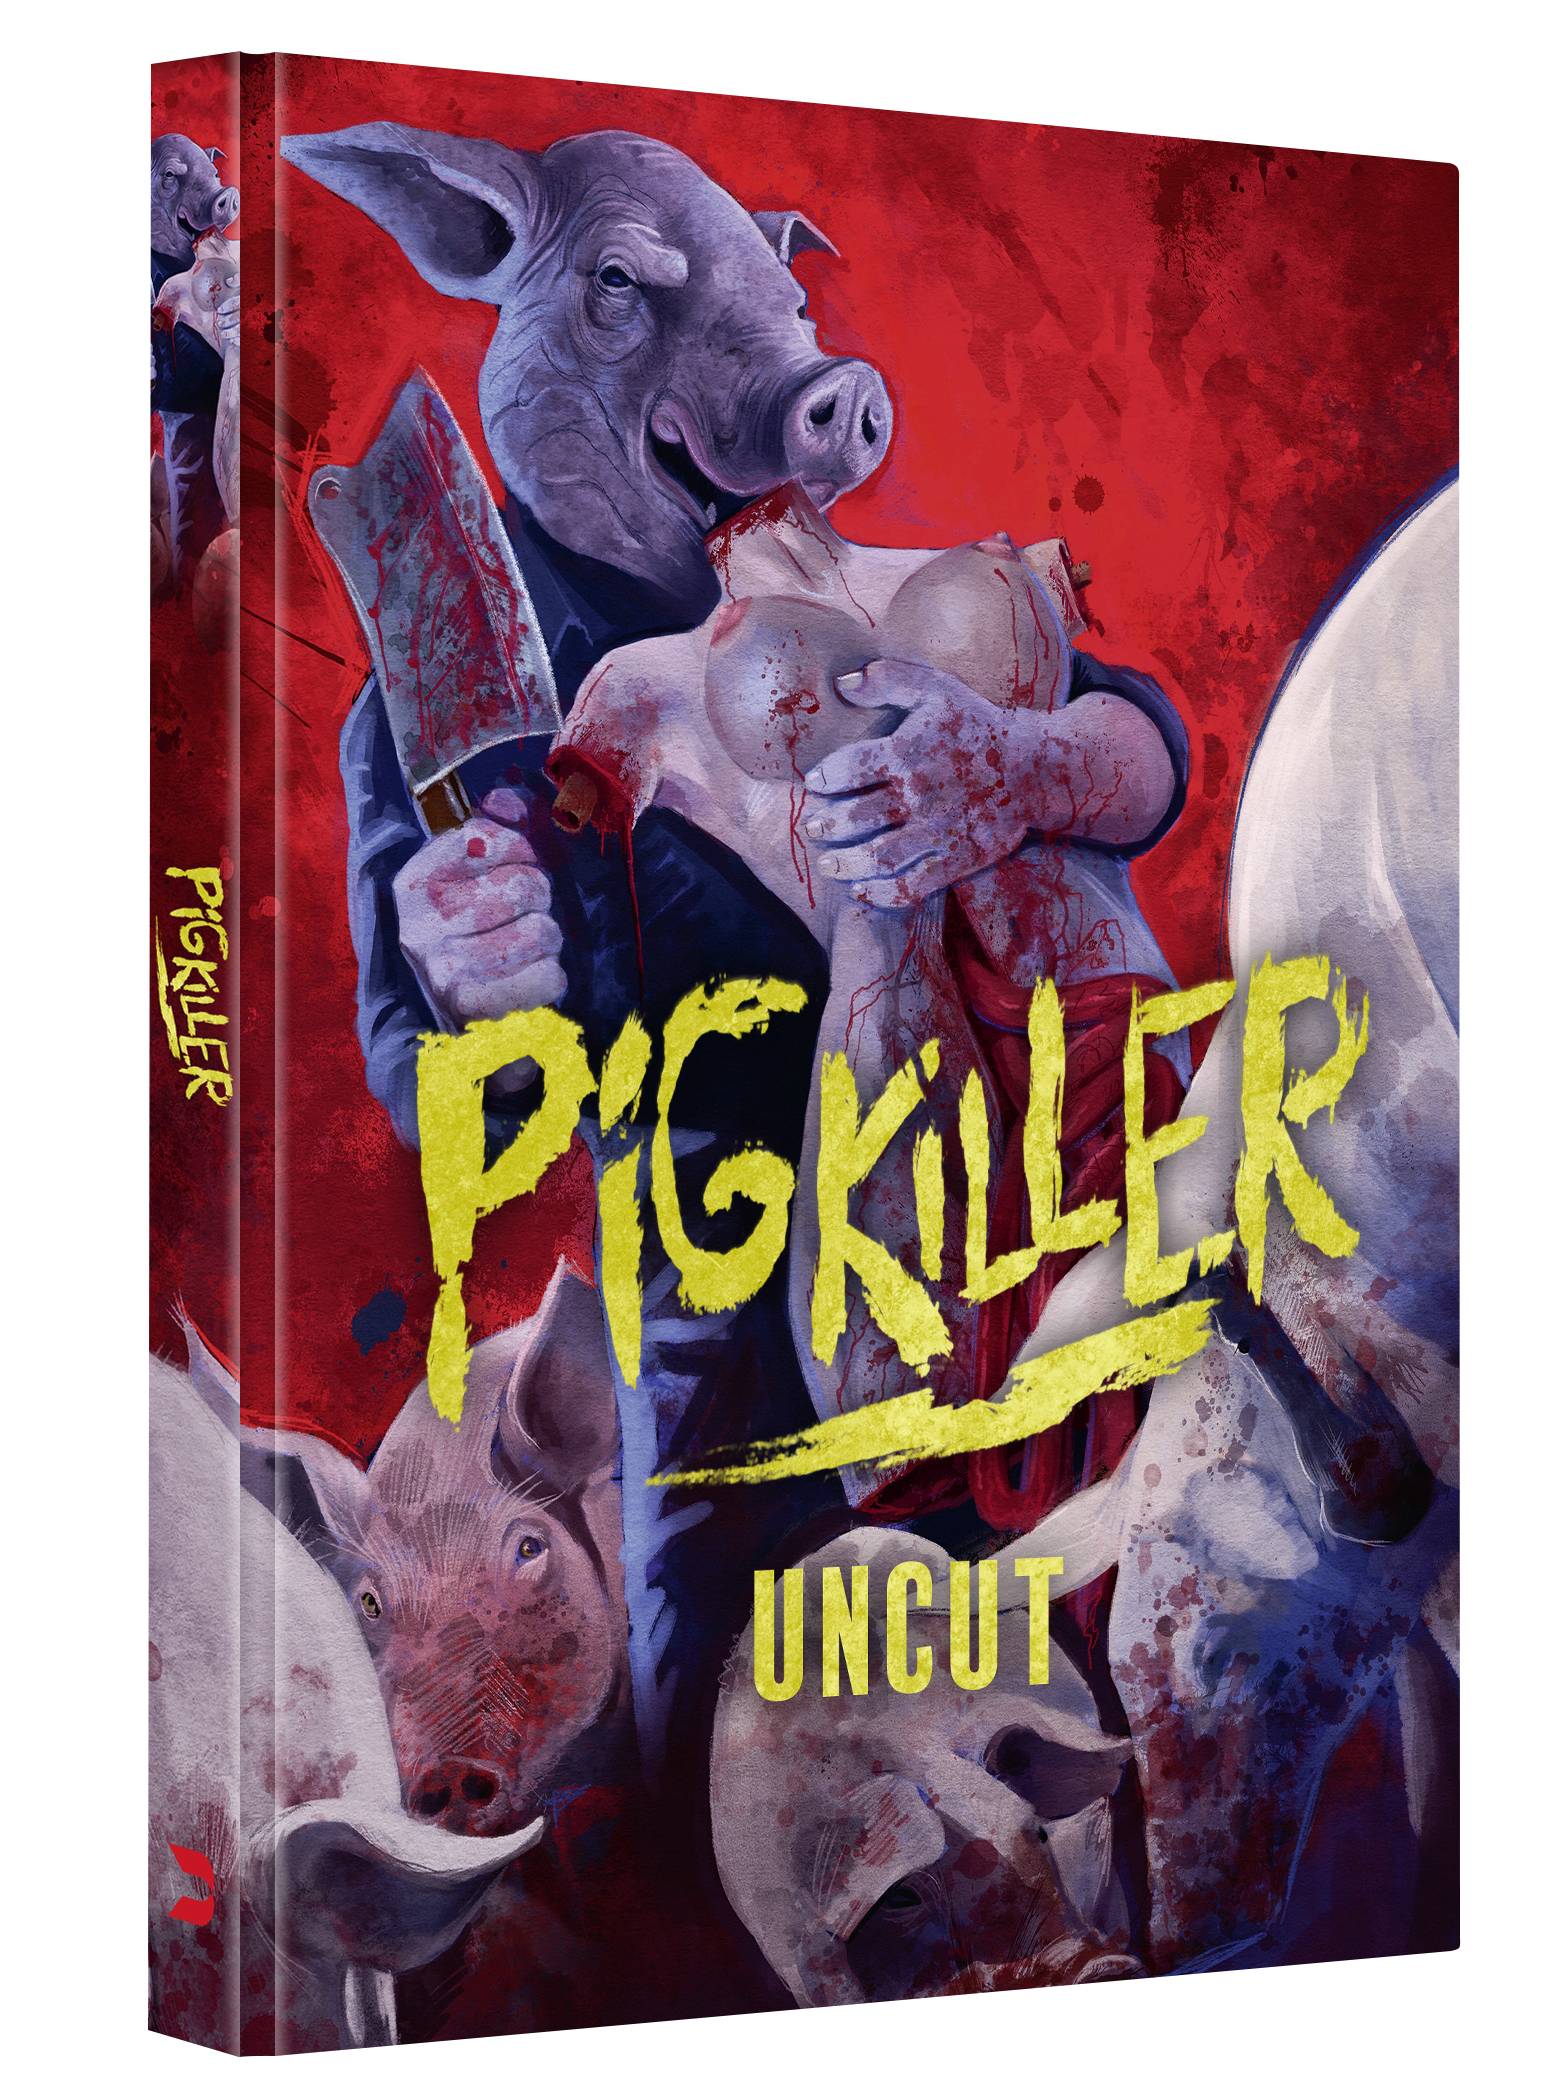 Pig Killer - 2-Disc Limited Edition Mediabook (Blu-ray + Bonus-DVD)